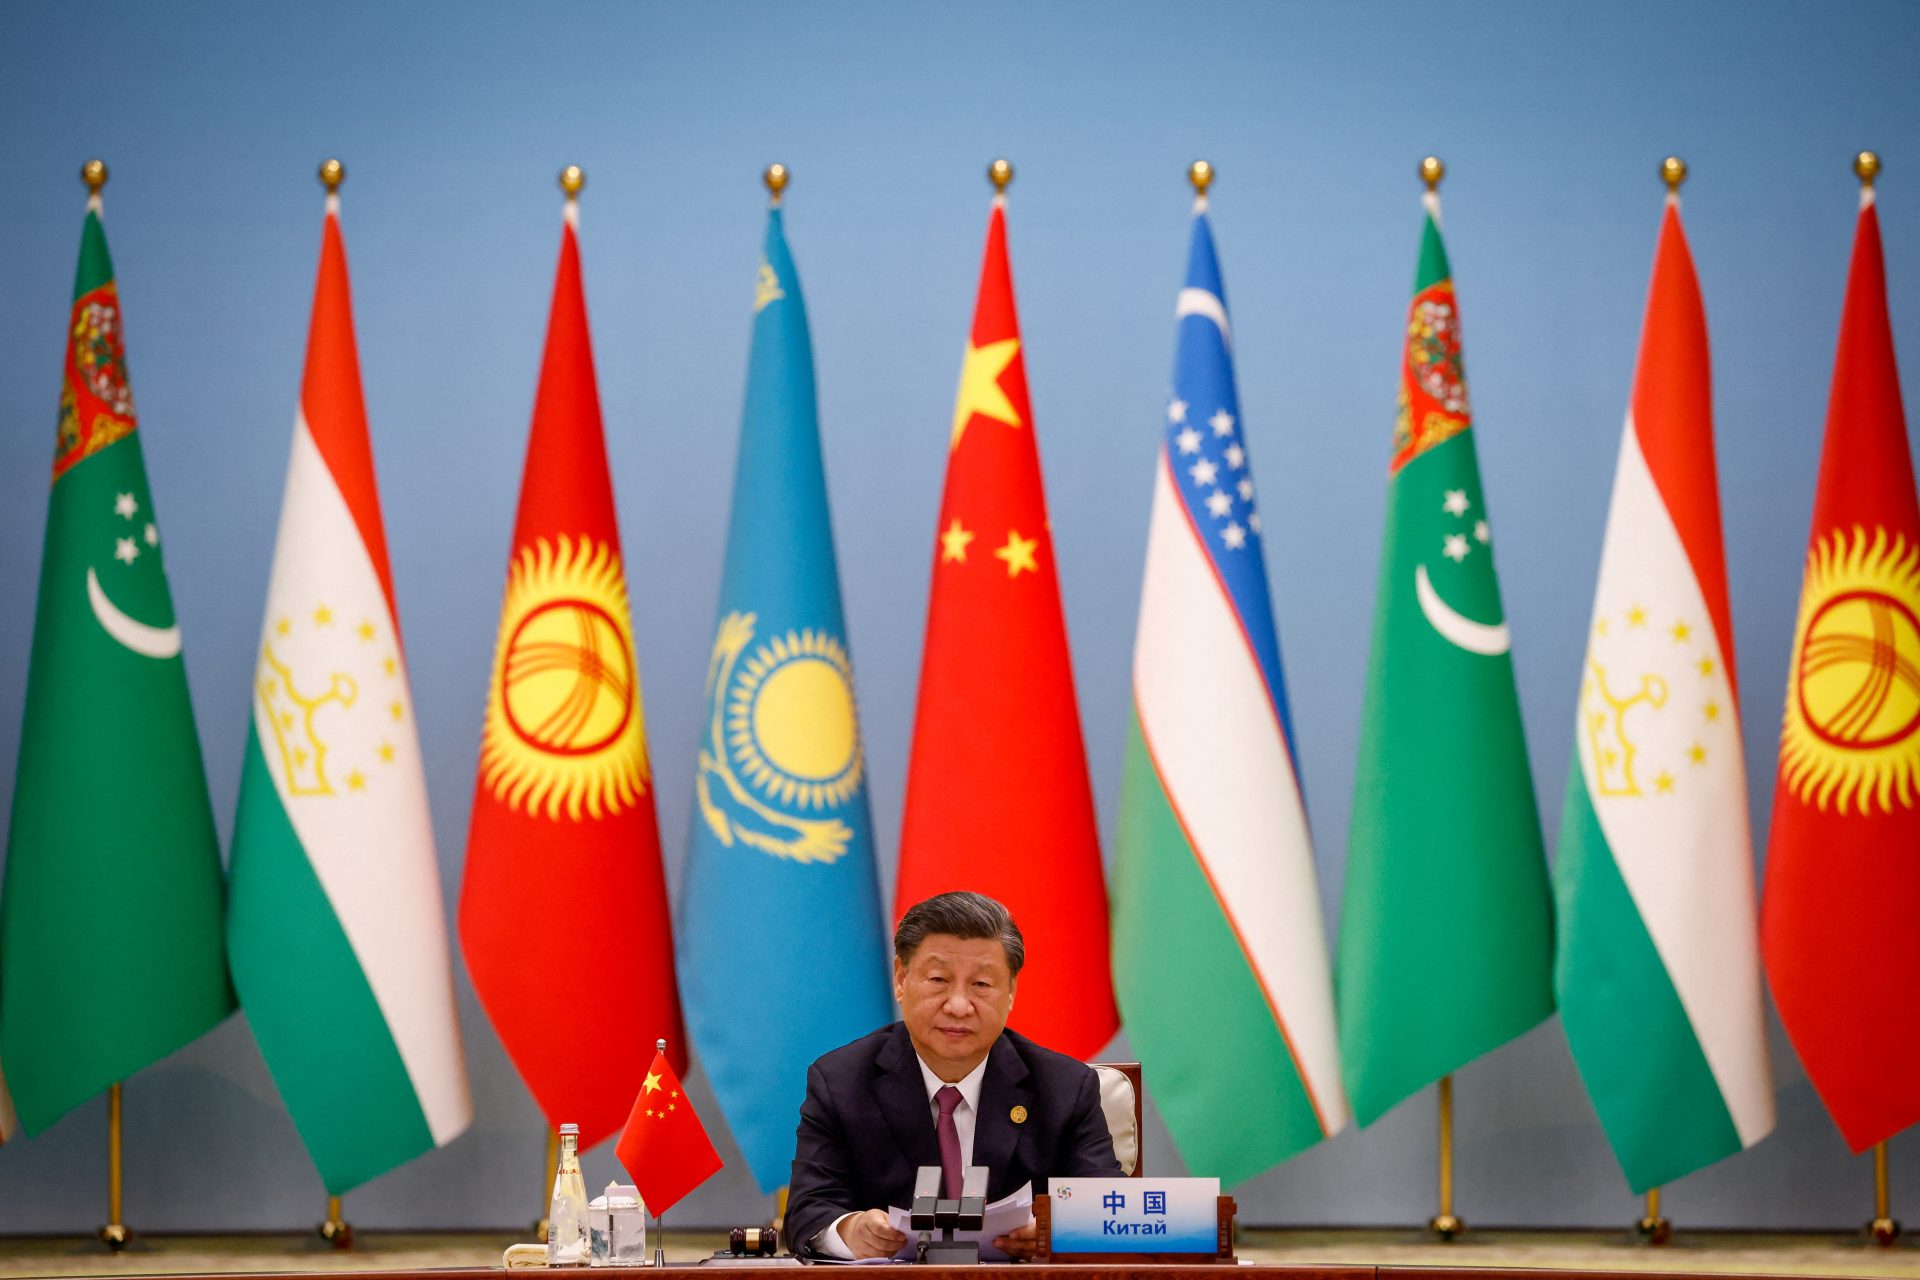 BRICS: Developing Countries Need To Repay China $1.1 Trillion